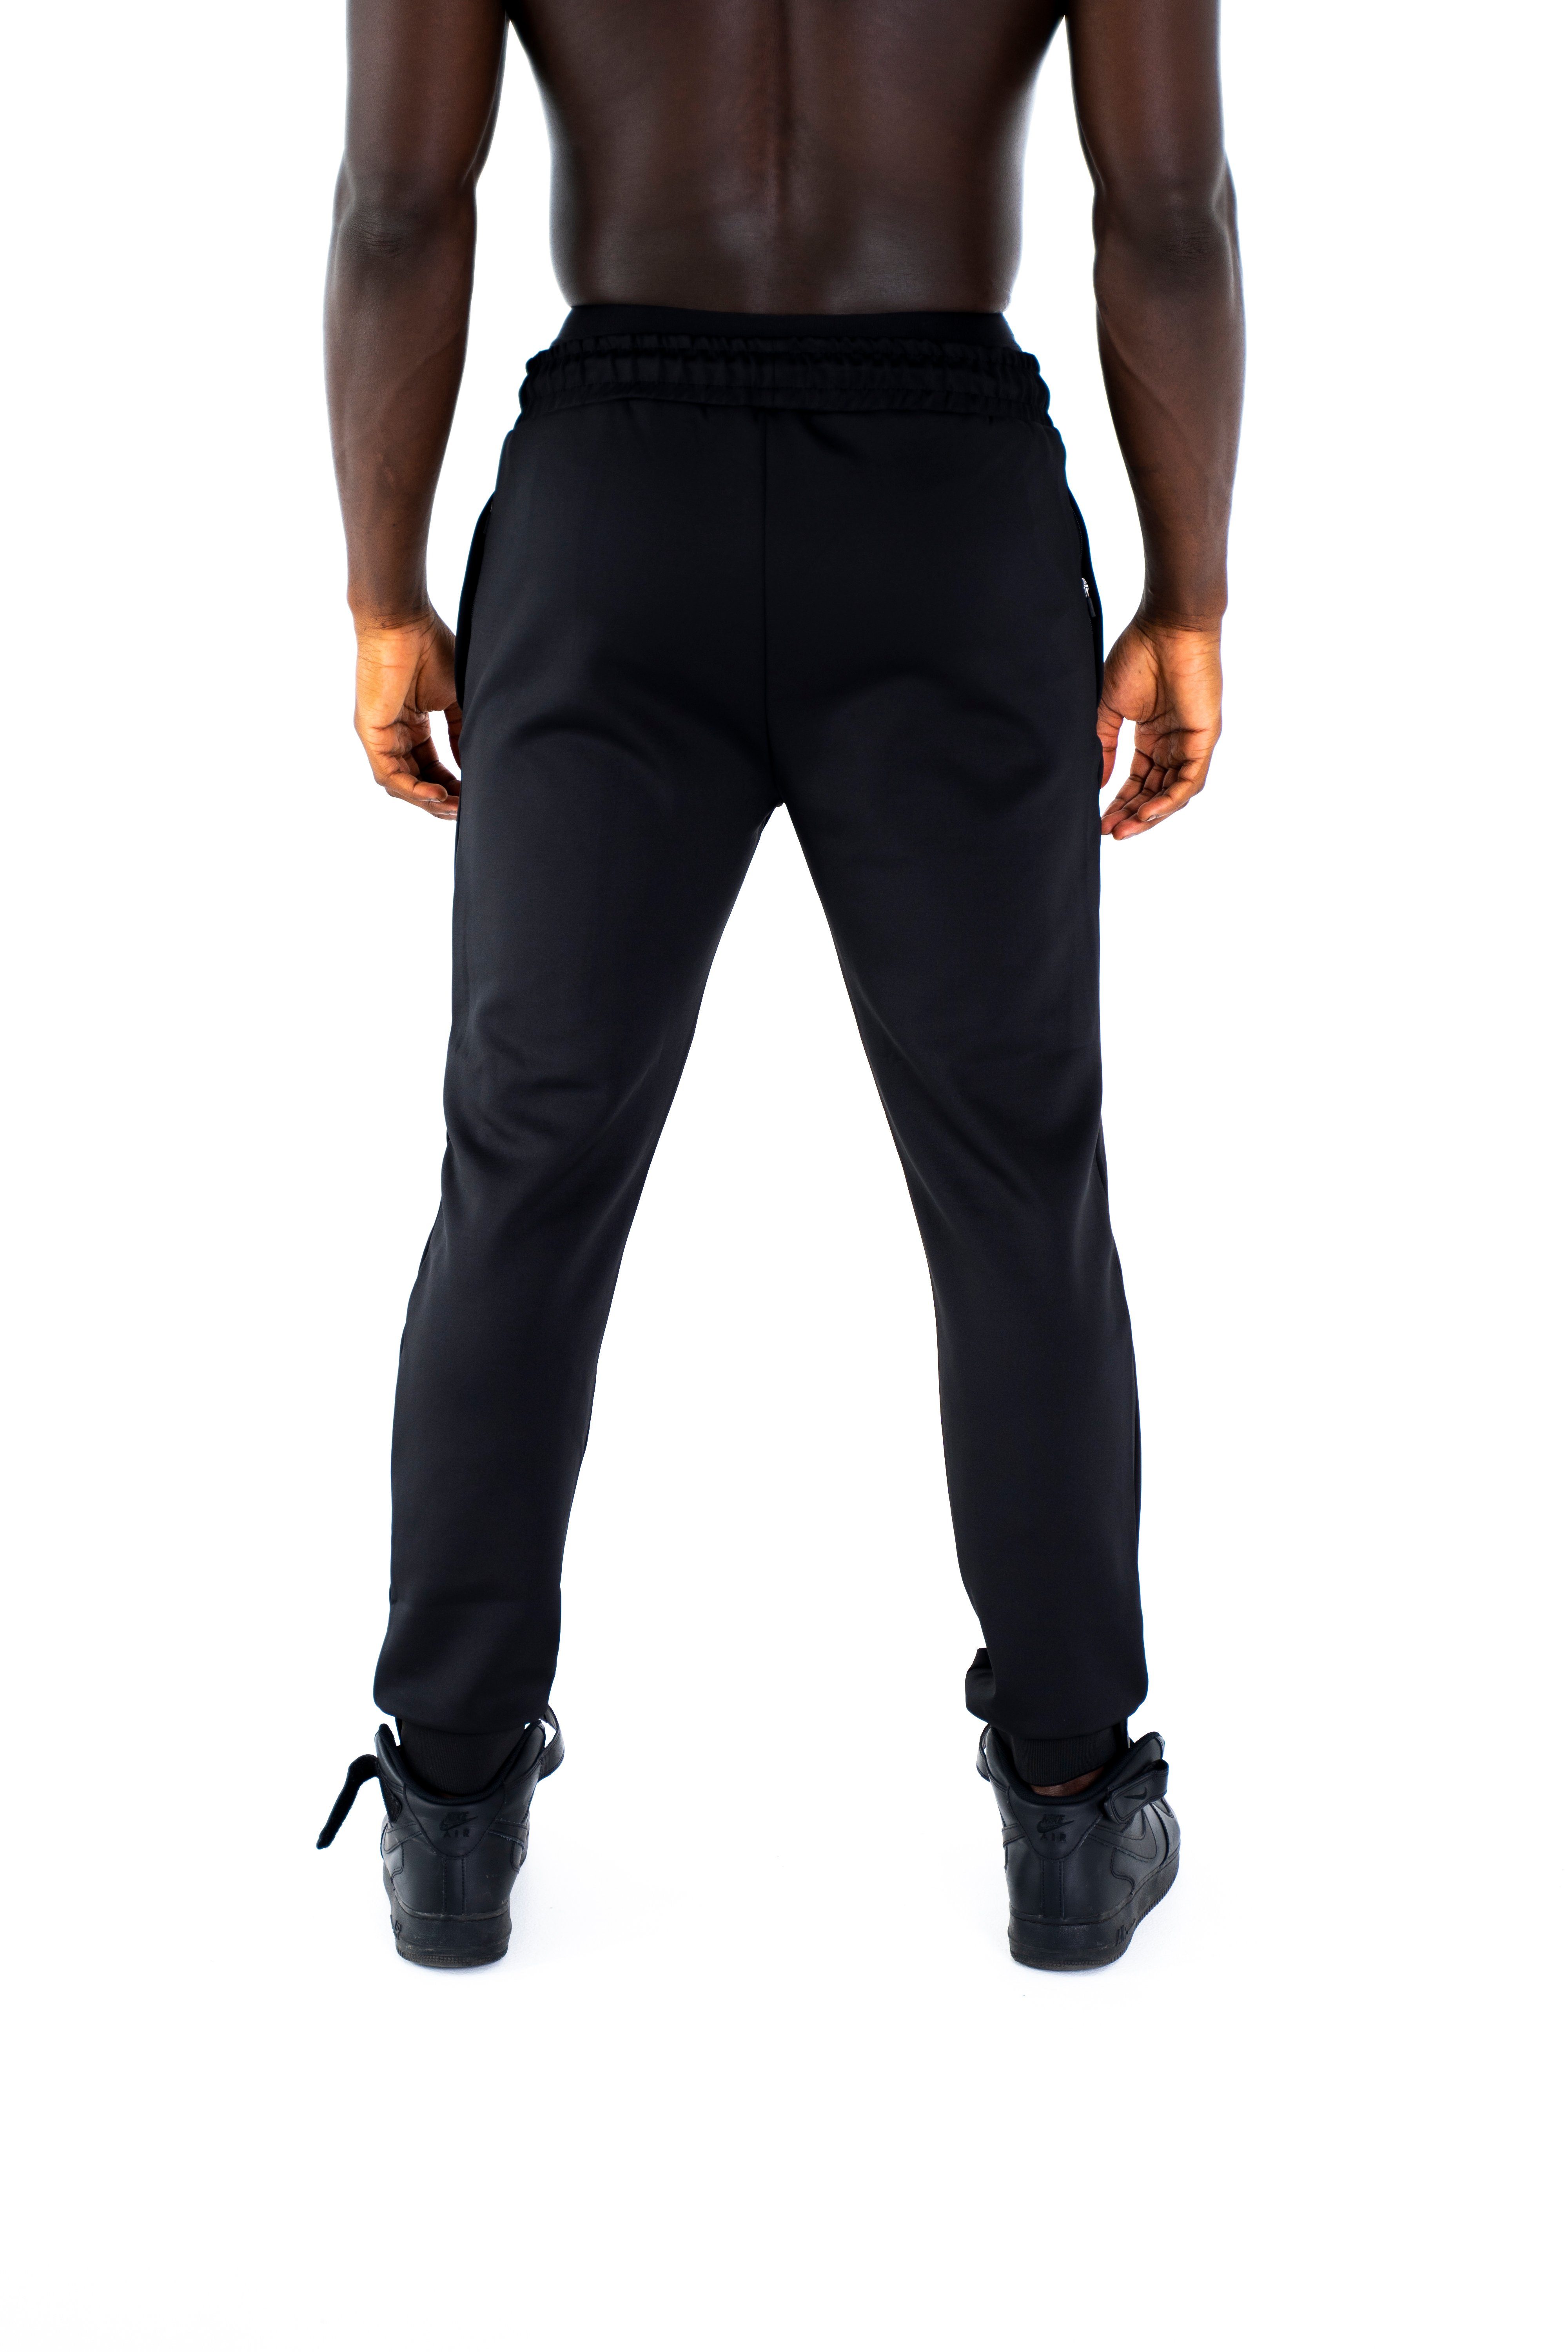 Universum Sportwear Jogginghose Modern Fit Pants für Sport, Freizeit Fitness und schwarz Jogginghose